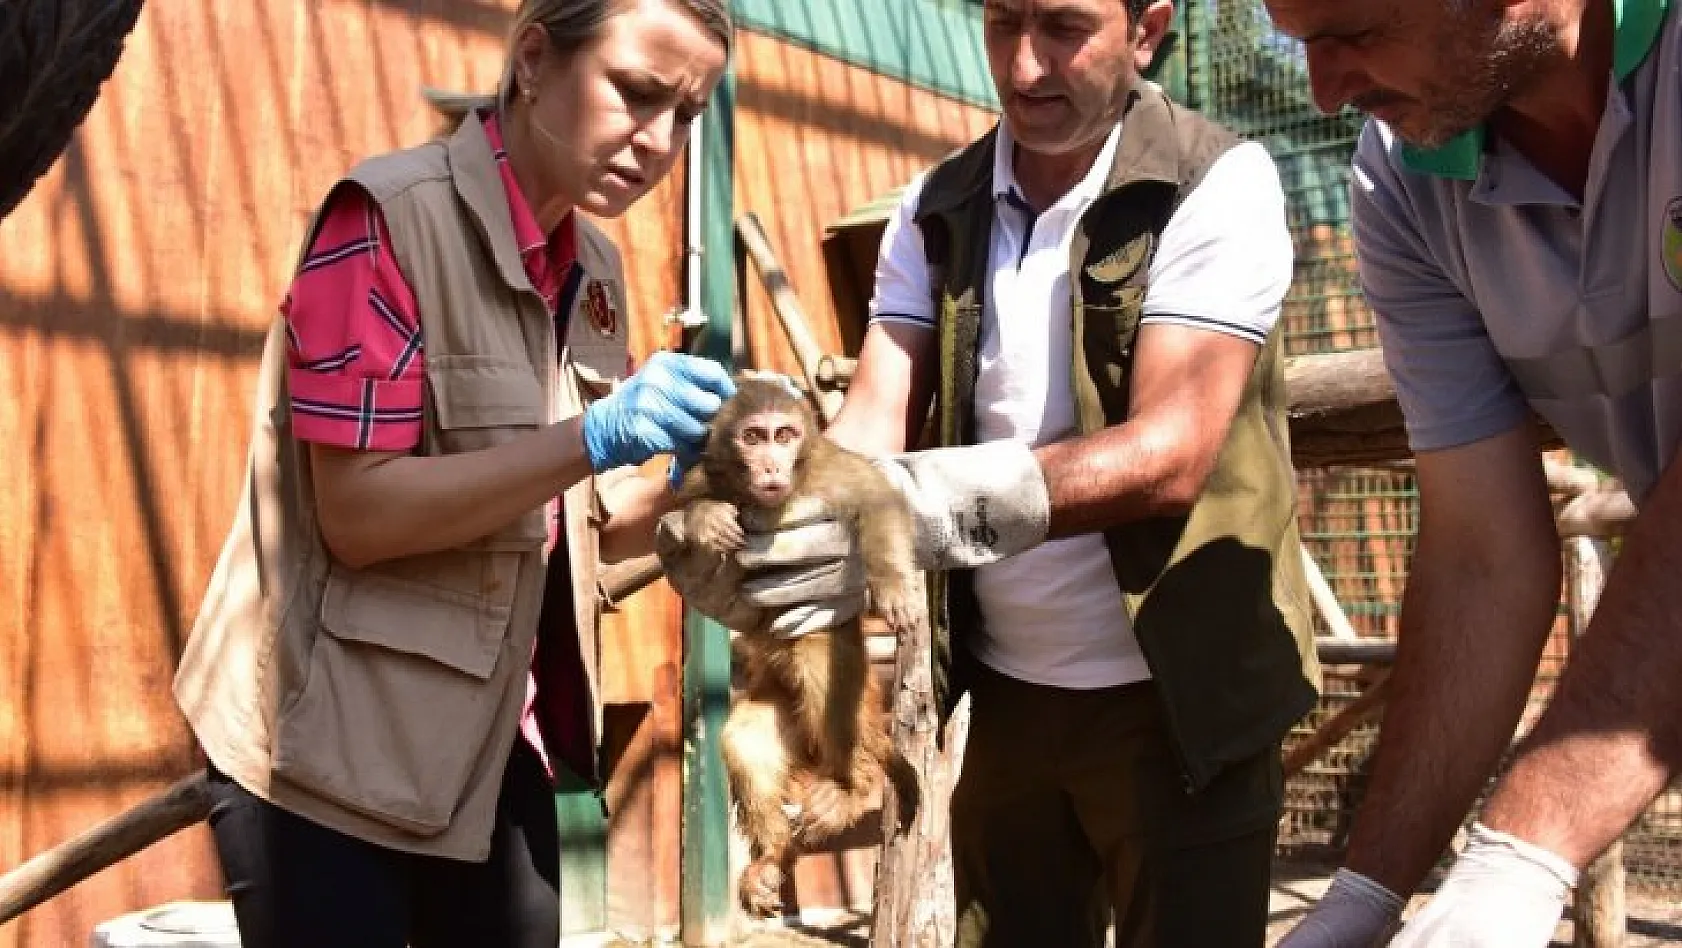 Sınır kapısında yakalanan maymunlar Malatya'da